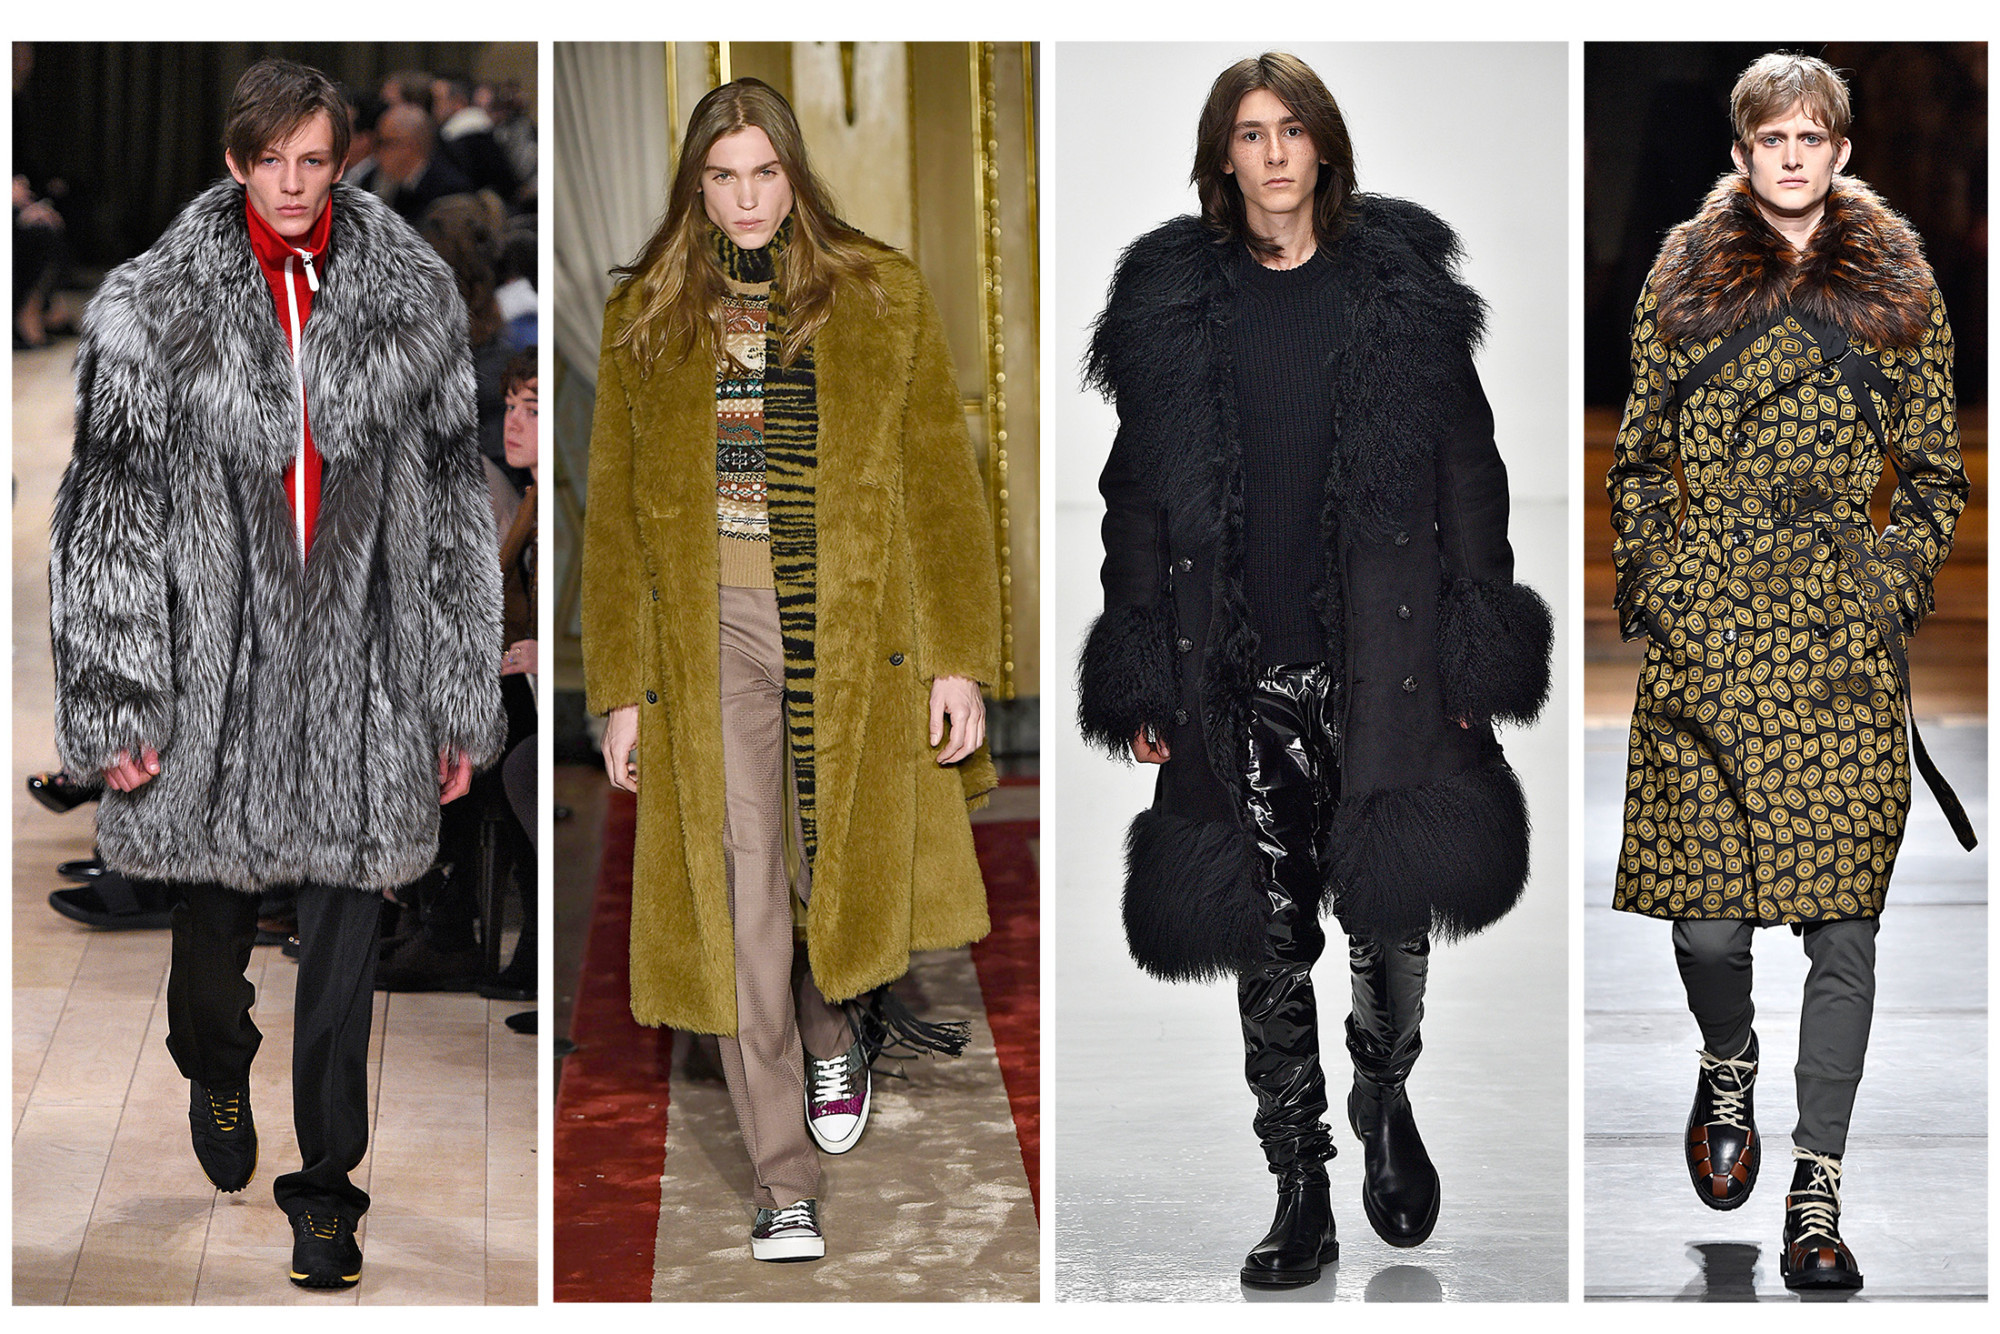 European Menswear Designers Are Pushing Fur for Fall 2016 - Bloomberg